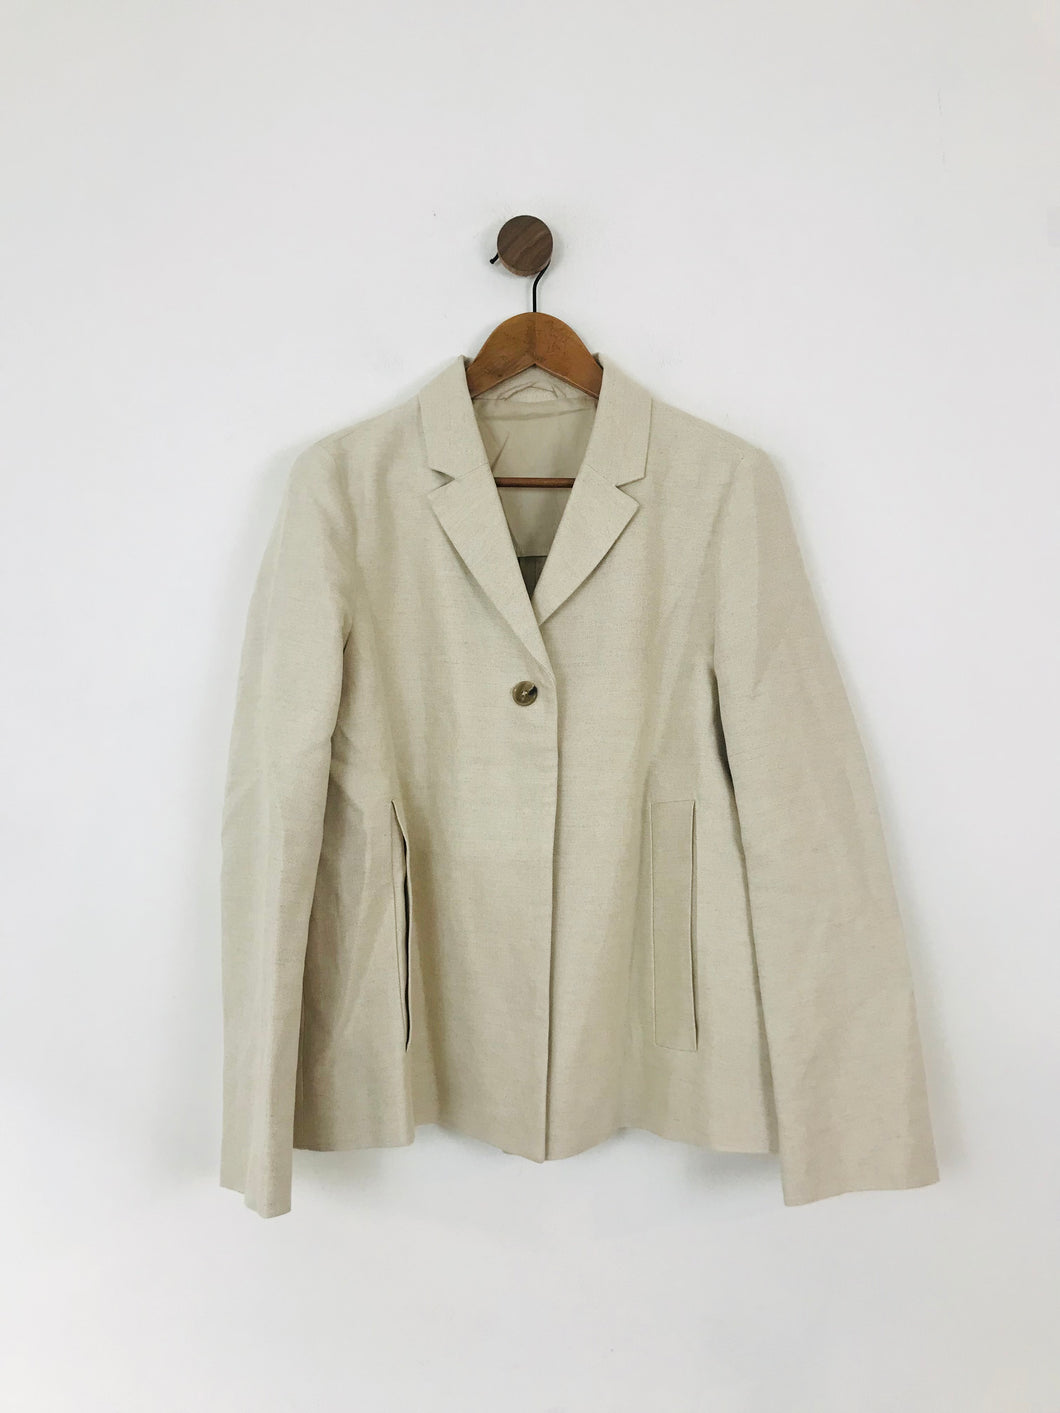 COS Women's Linen Blend Blazer Jacket | 38 UK10 | Beige